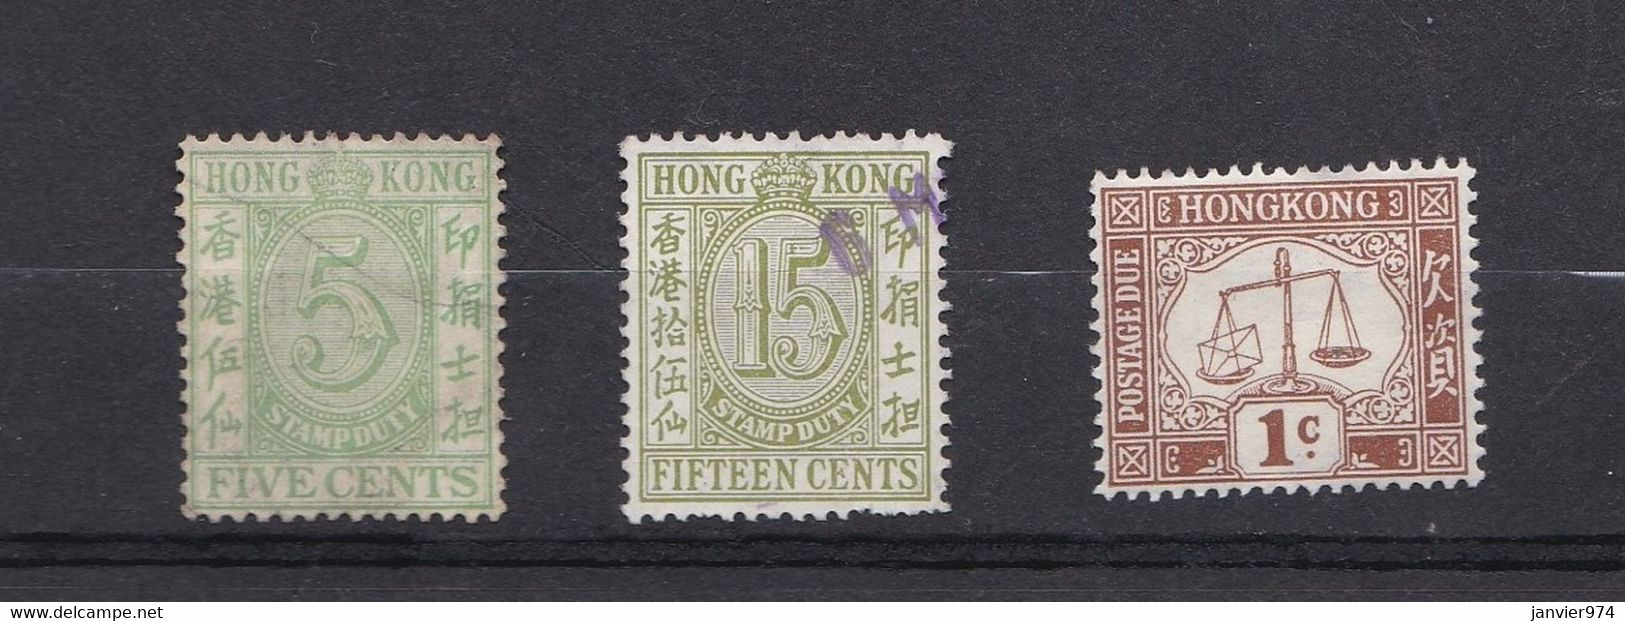 Hong Kong 2 Timbres 5 Cent Et 15 Cents 1938 + Un Timbre Taxe 1924, Voir Scan - Francobollo Fiscali Postali